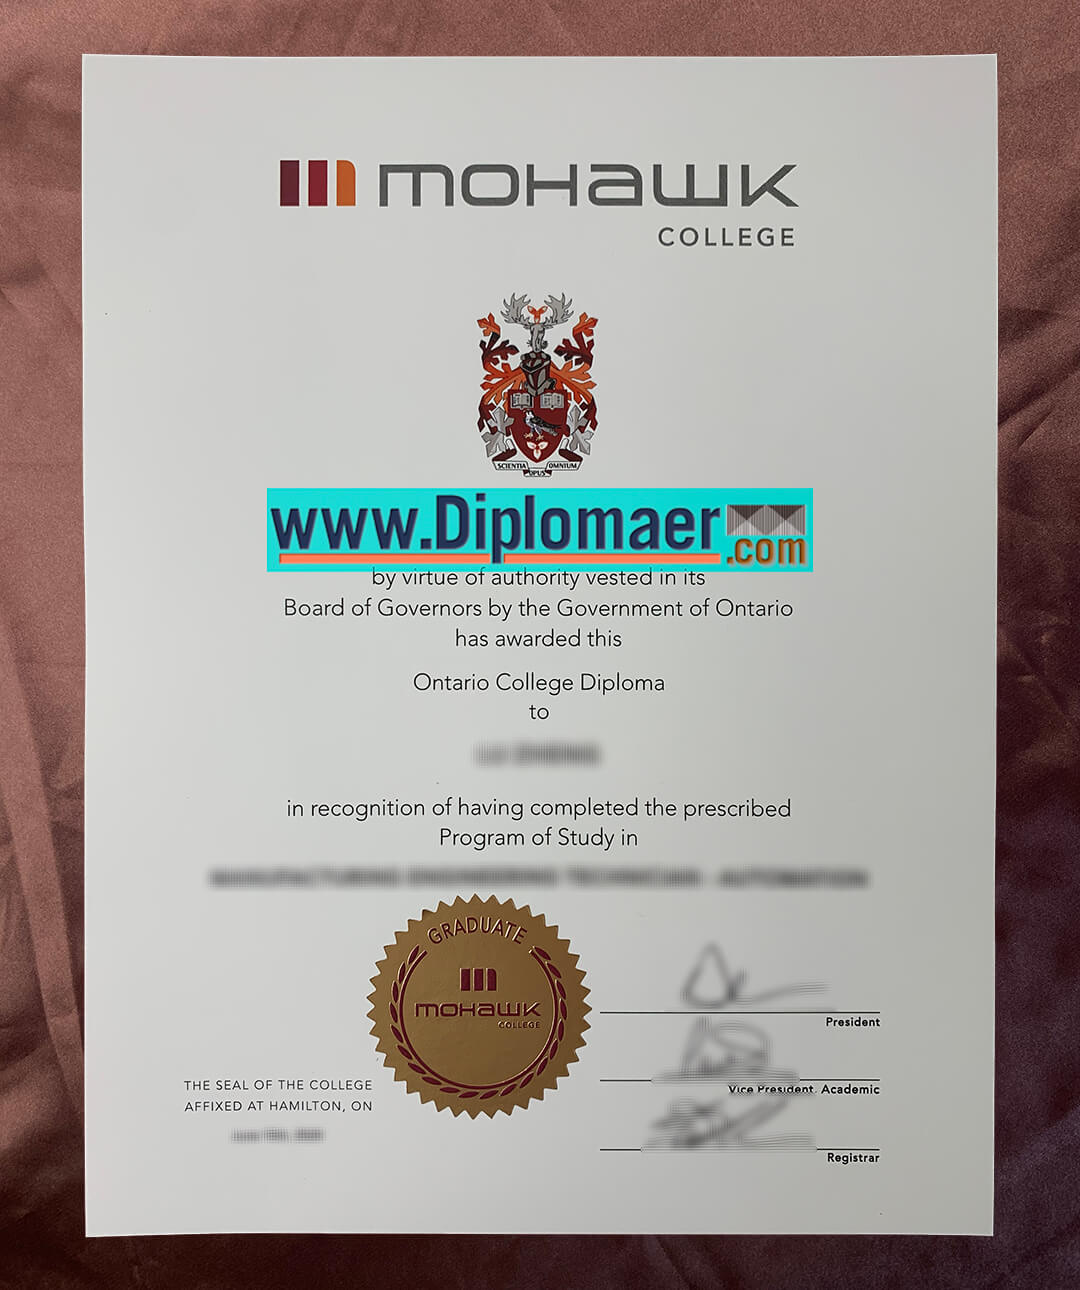 Mohawk College fake diploma - Buy Mohawk College Fake Diploma in Canada